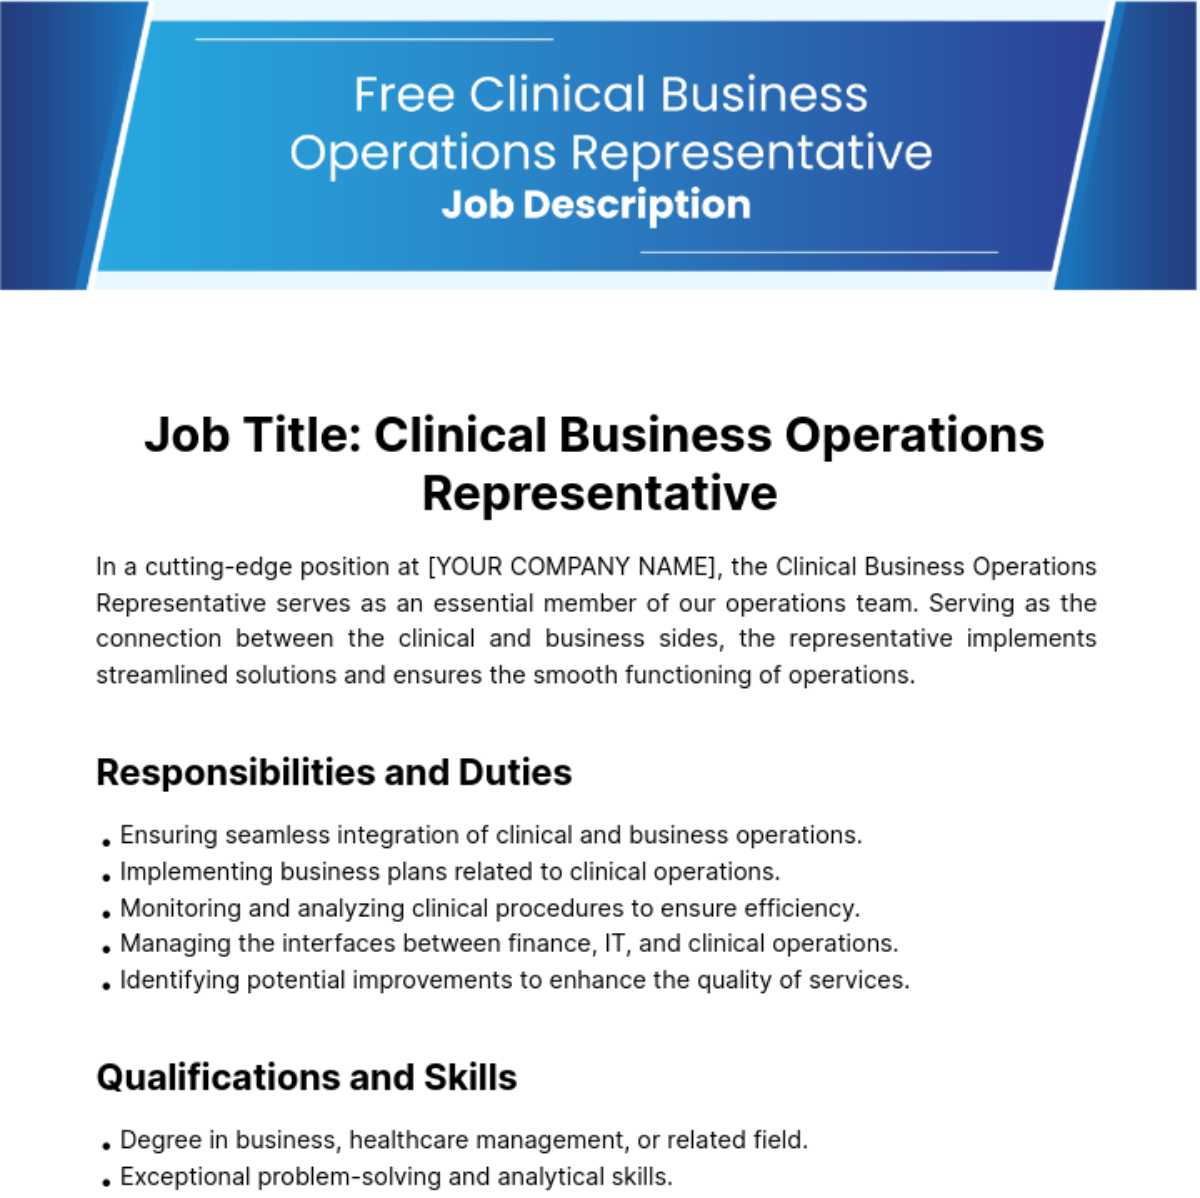 Clinical Business Operations Representative Job Description Template